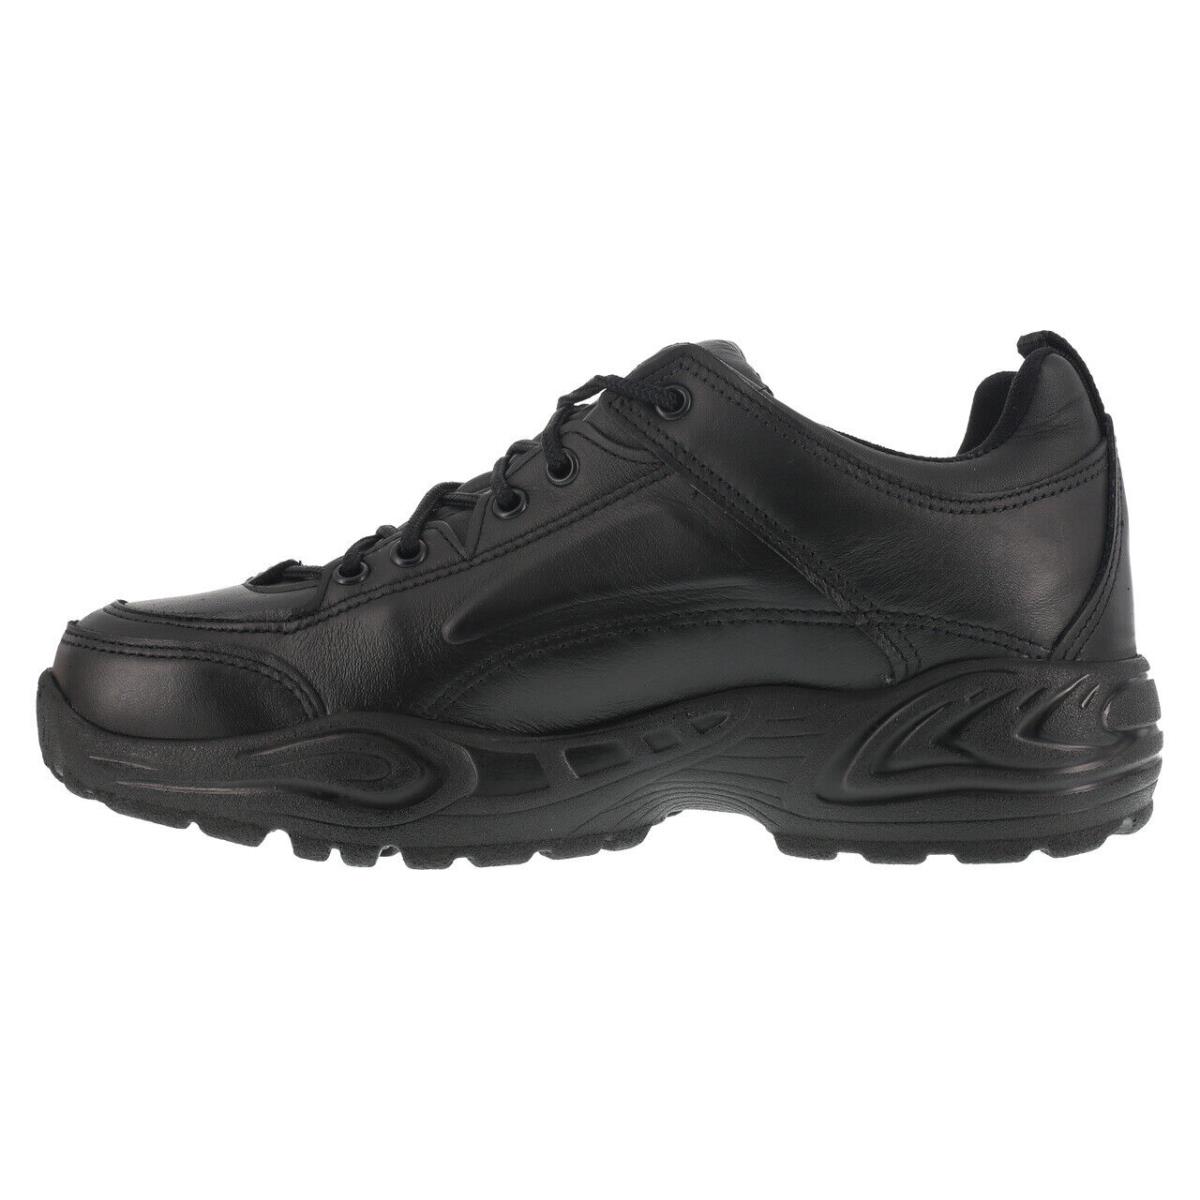 Reebok Postal Express Men`s Waterproof Postal Shoe Black Boots CP8115 - All Size 6